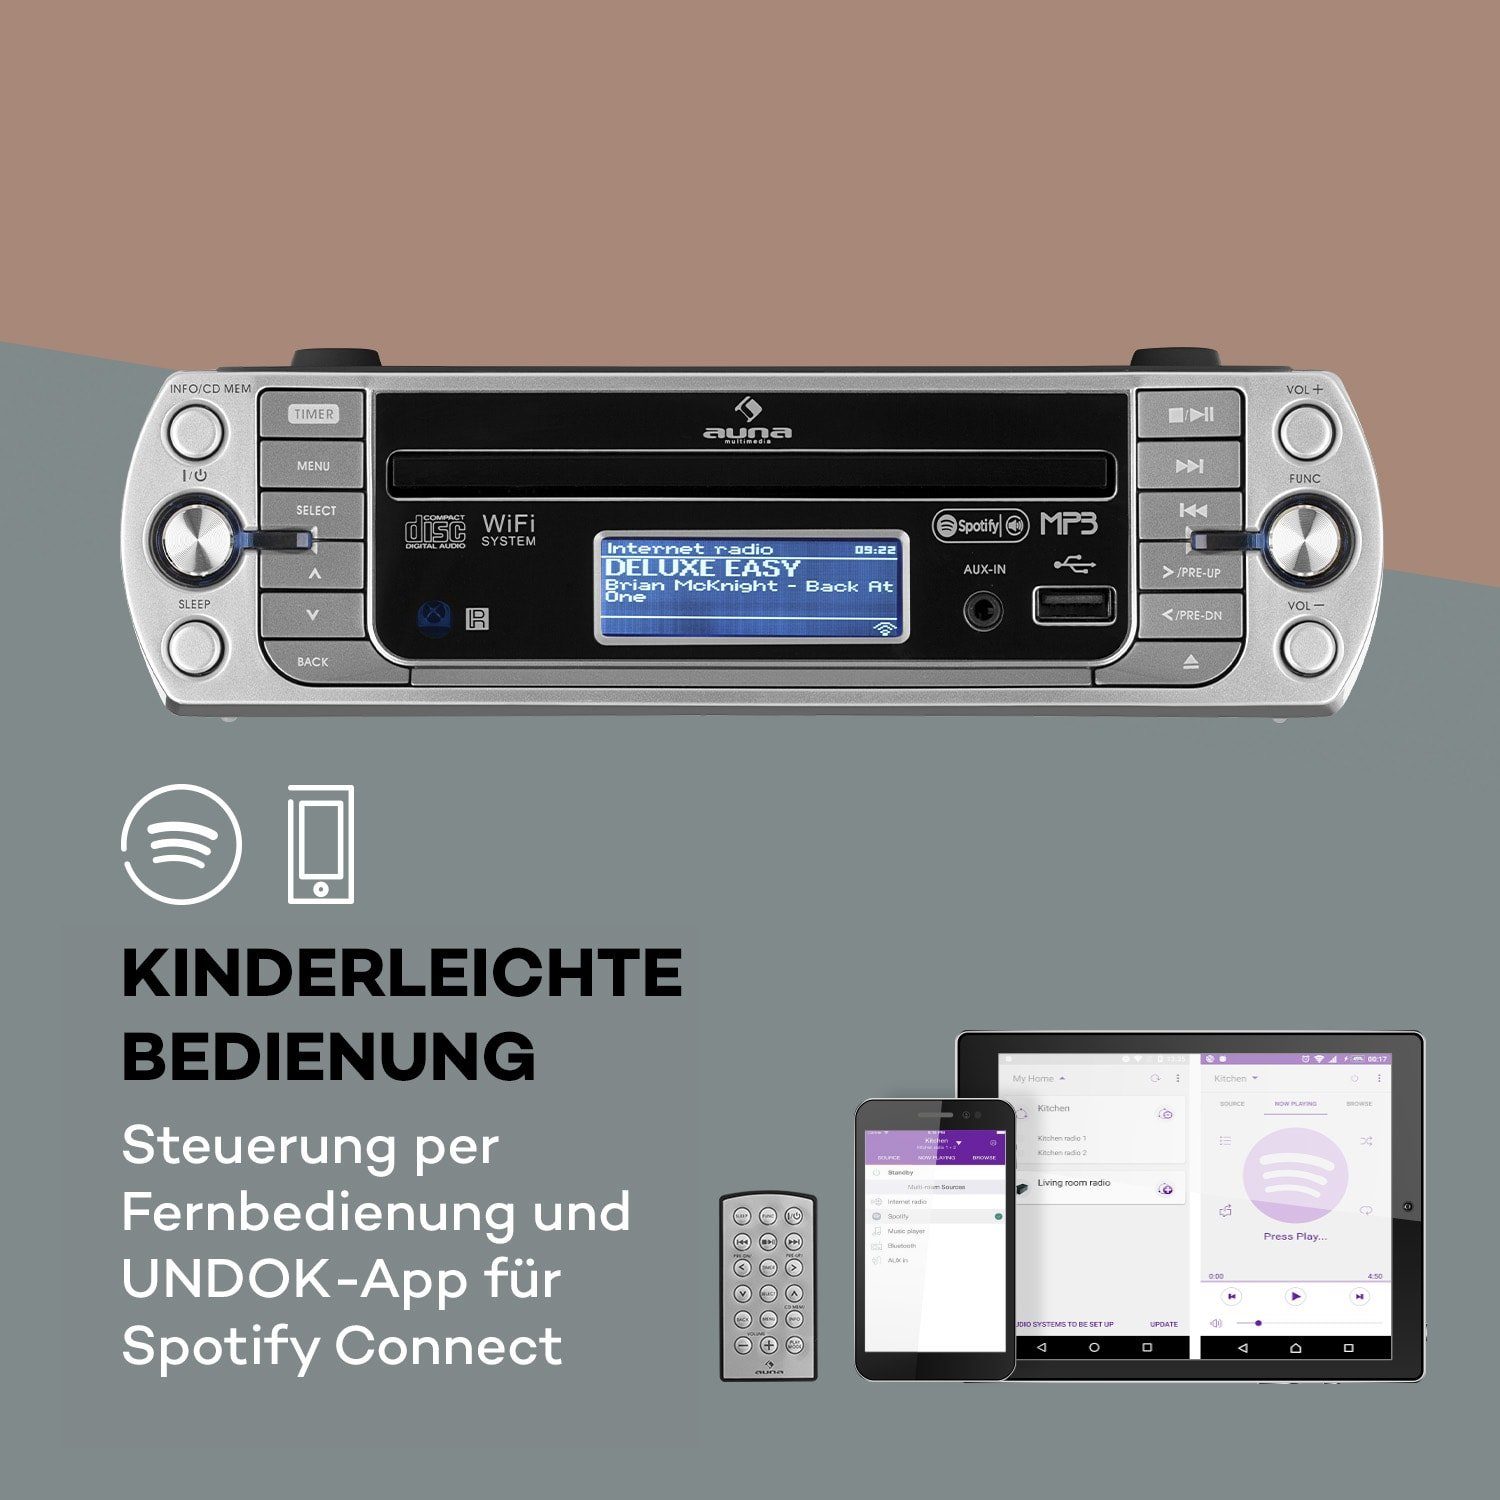 Auna KR-500 CD Radio (5.4 W)